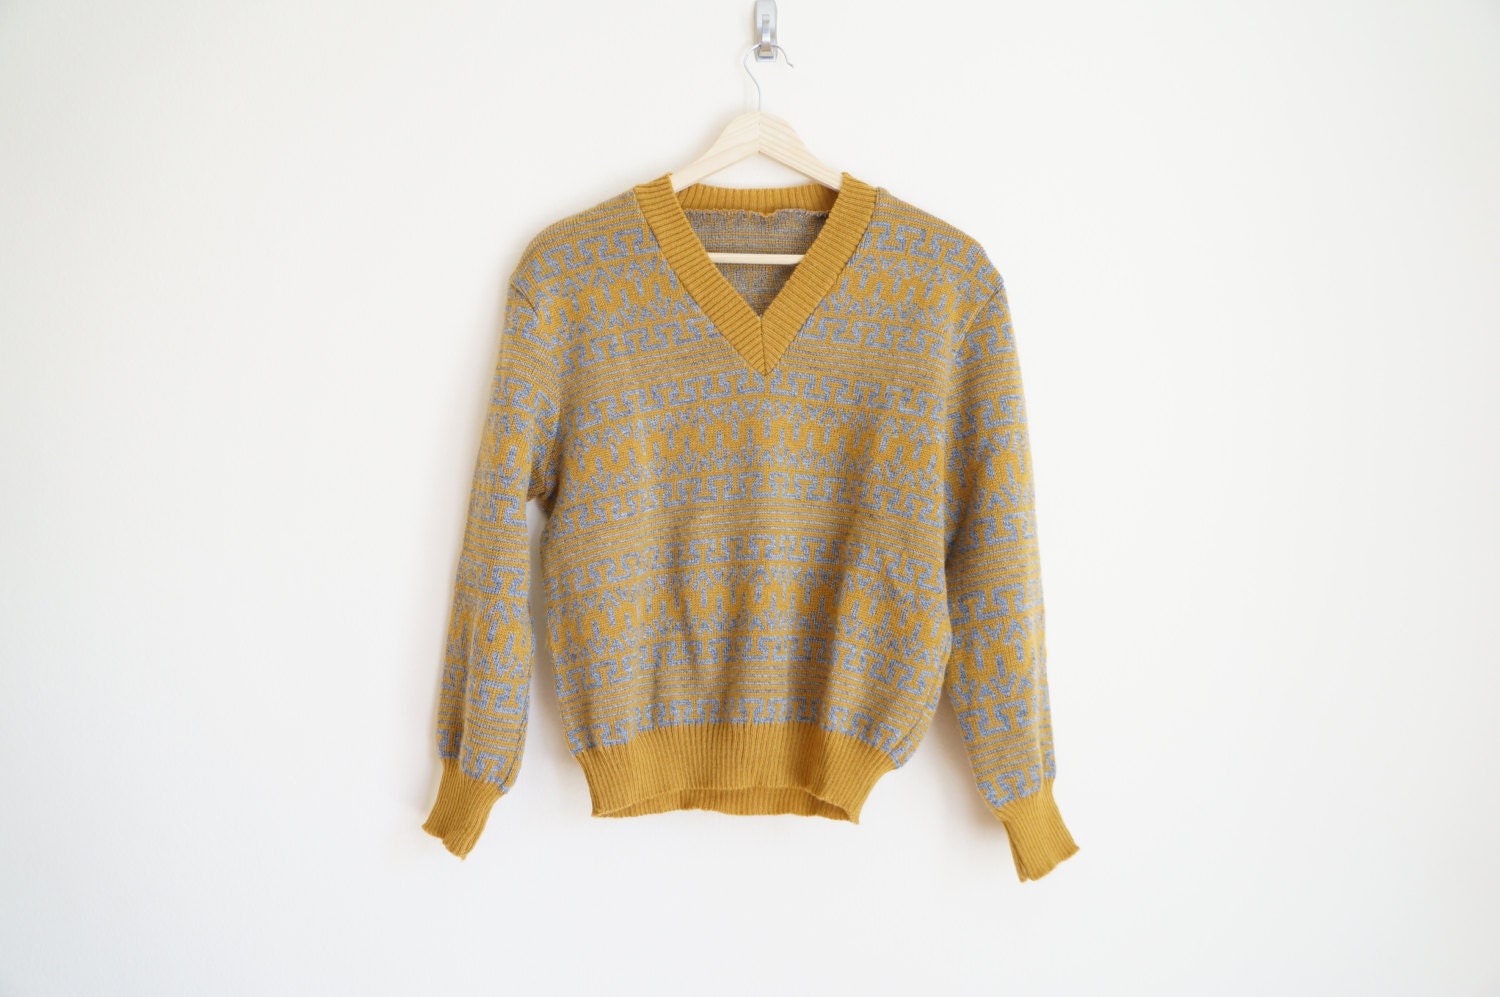 Vintage 1970s Jumper / Vintage 70s Sweater / by ValleyDollsVintage